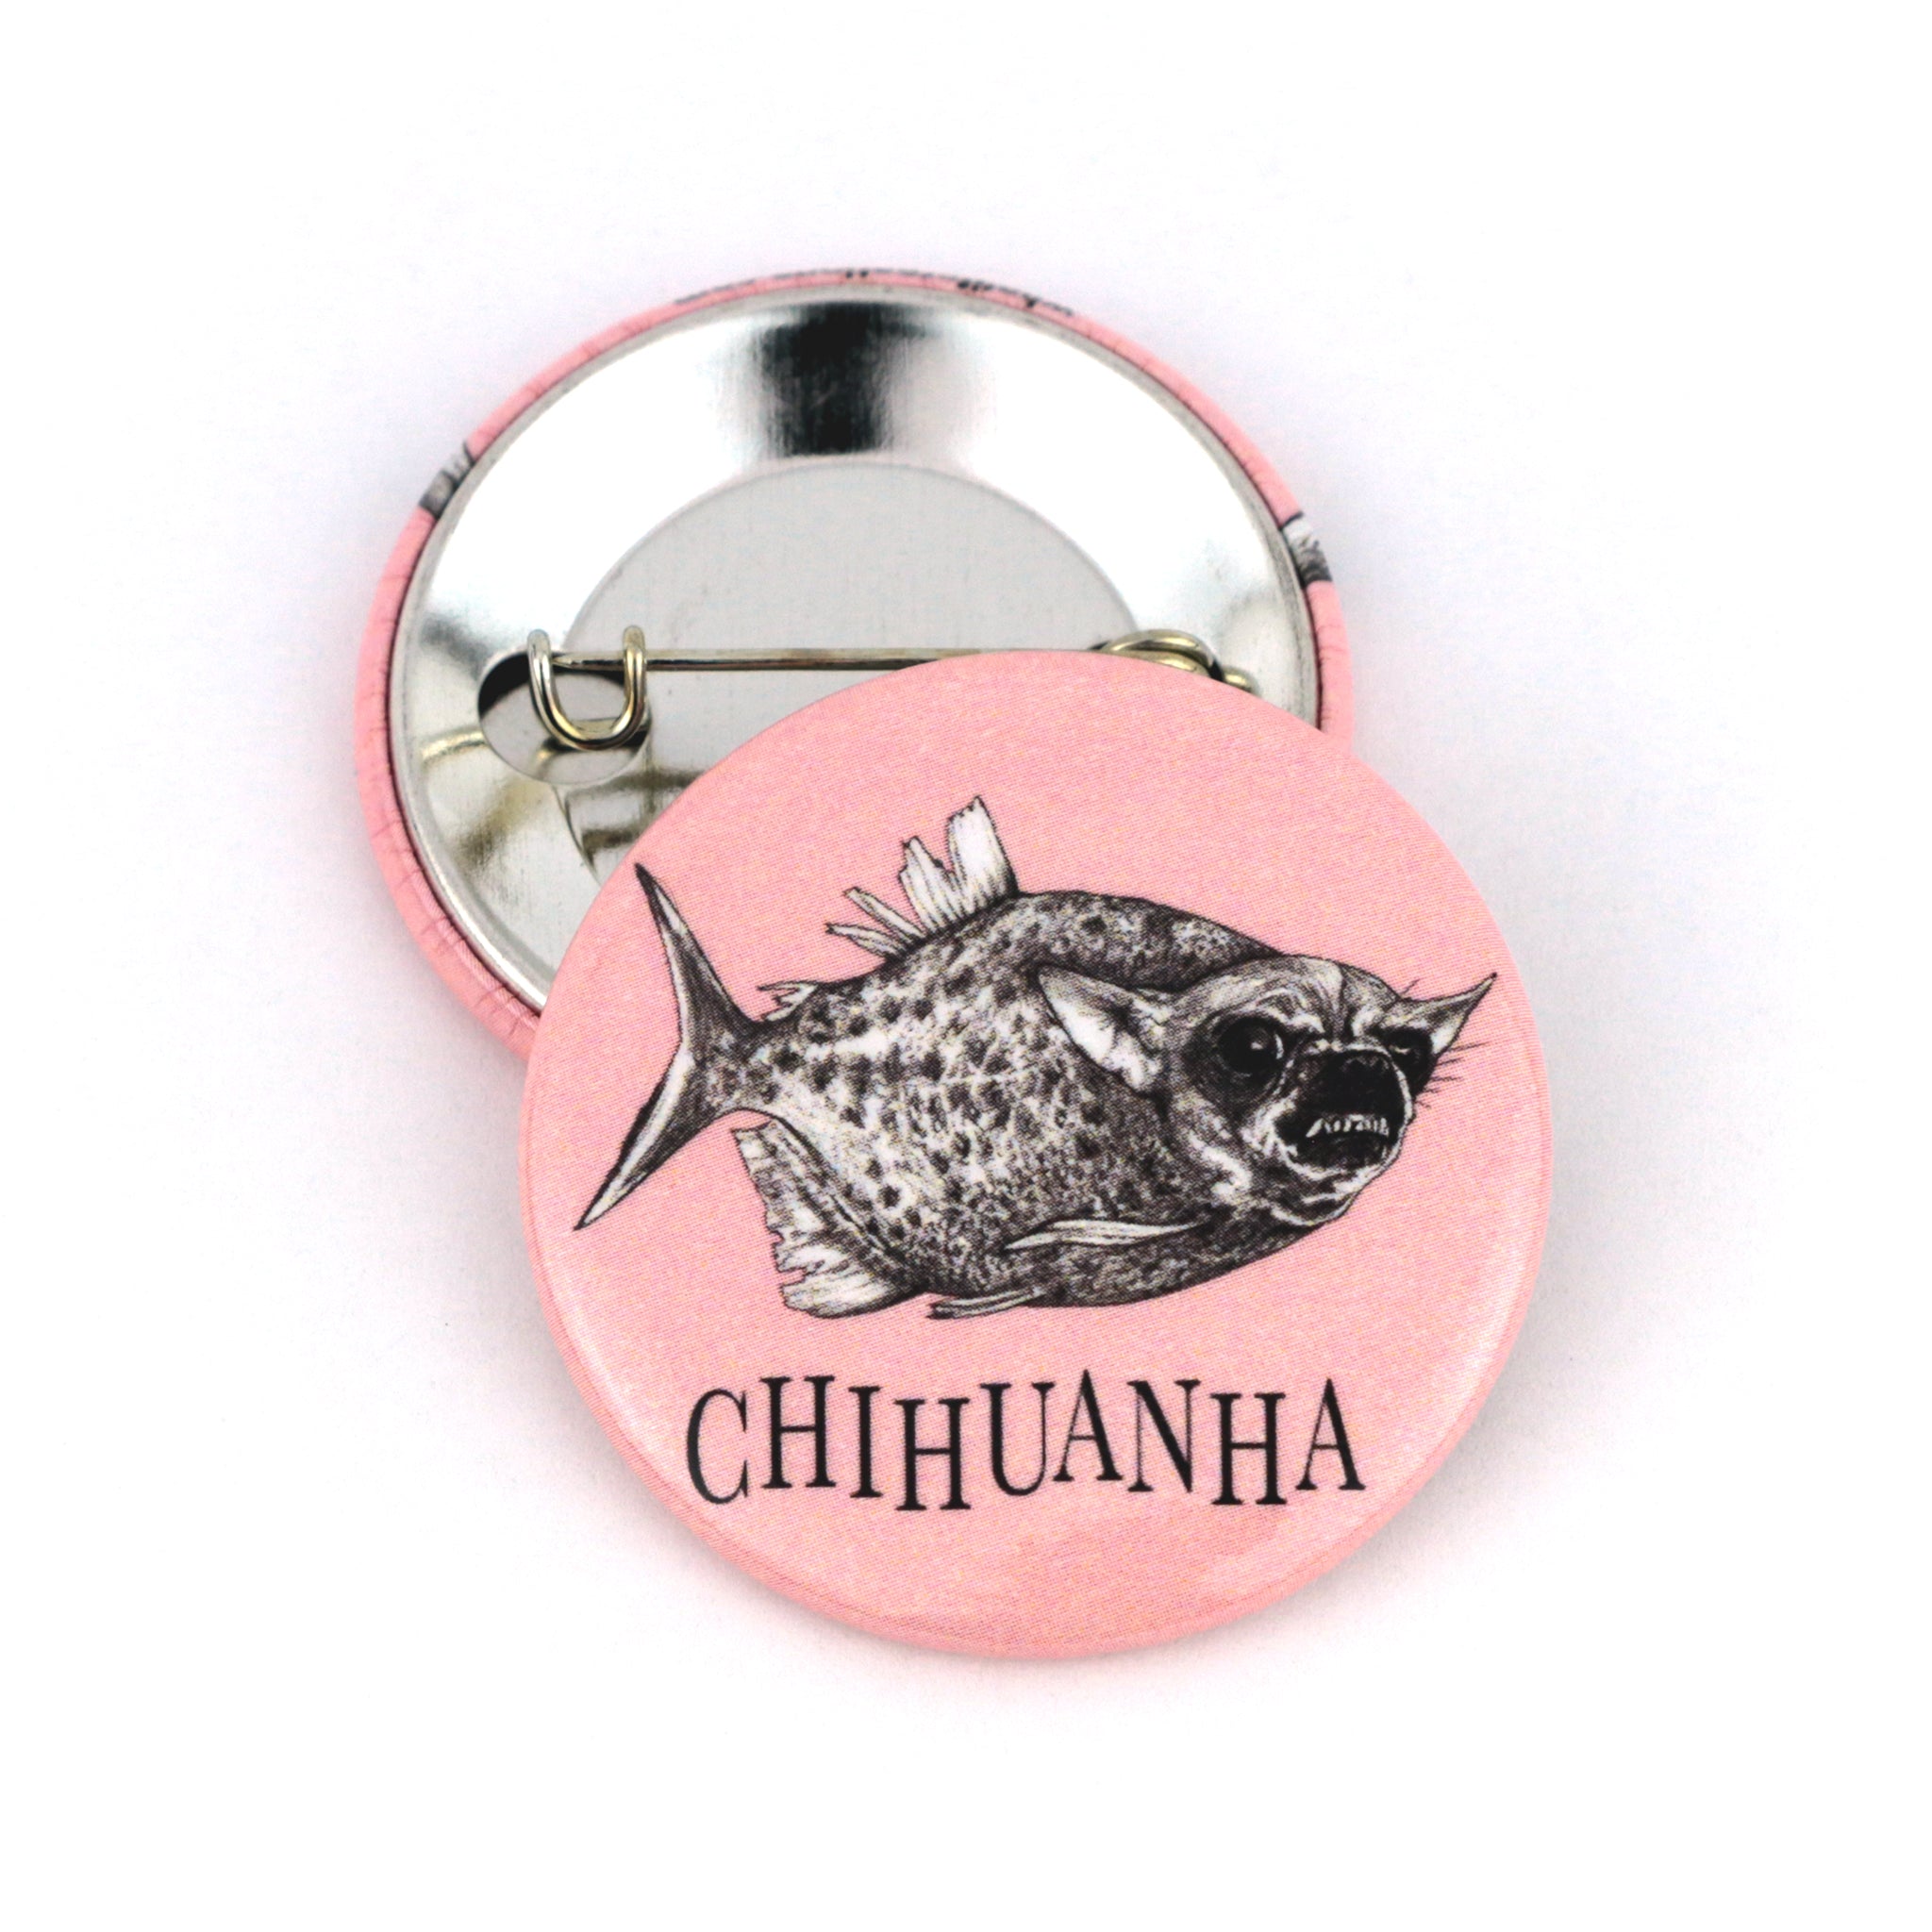 Chihuanha | Piranha + Chihuahua Hybrid Animal | 1.5" Pinback Button